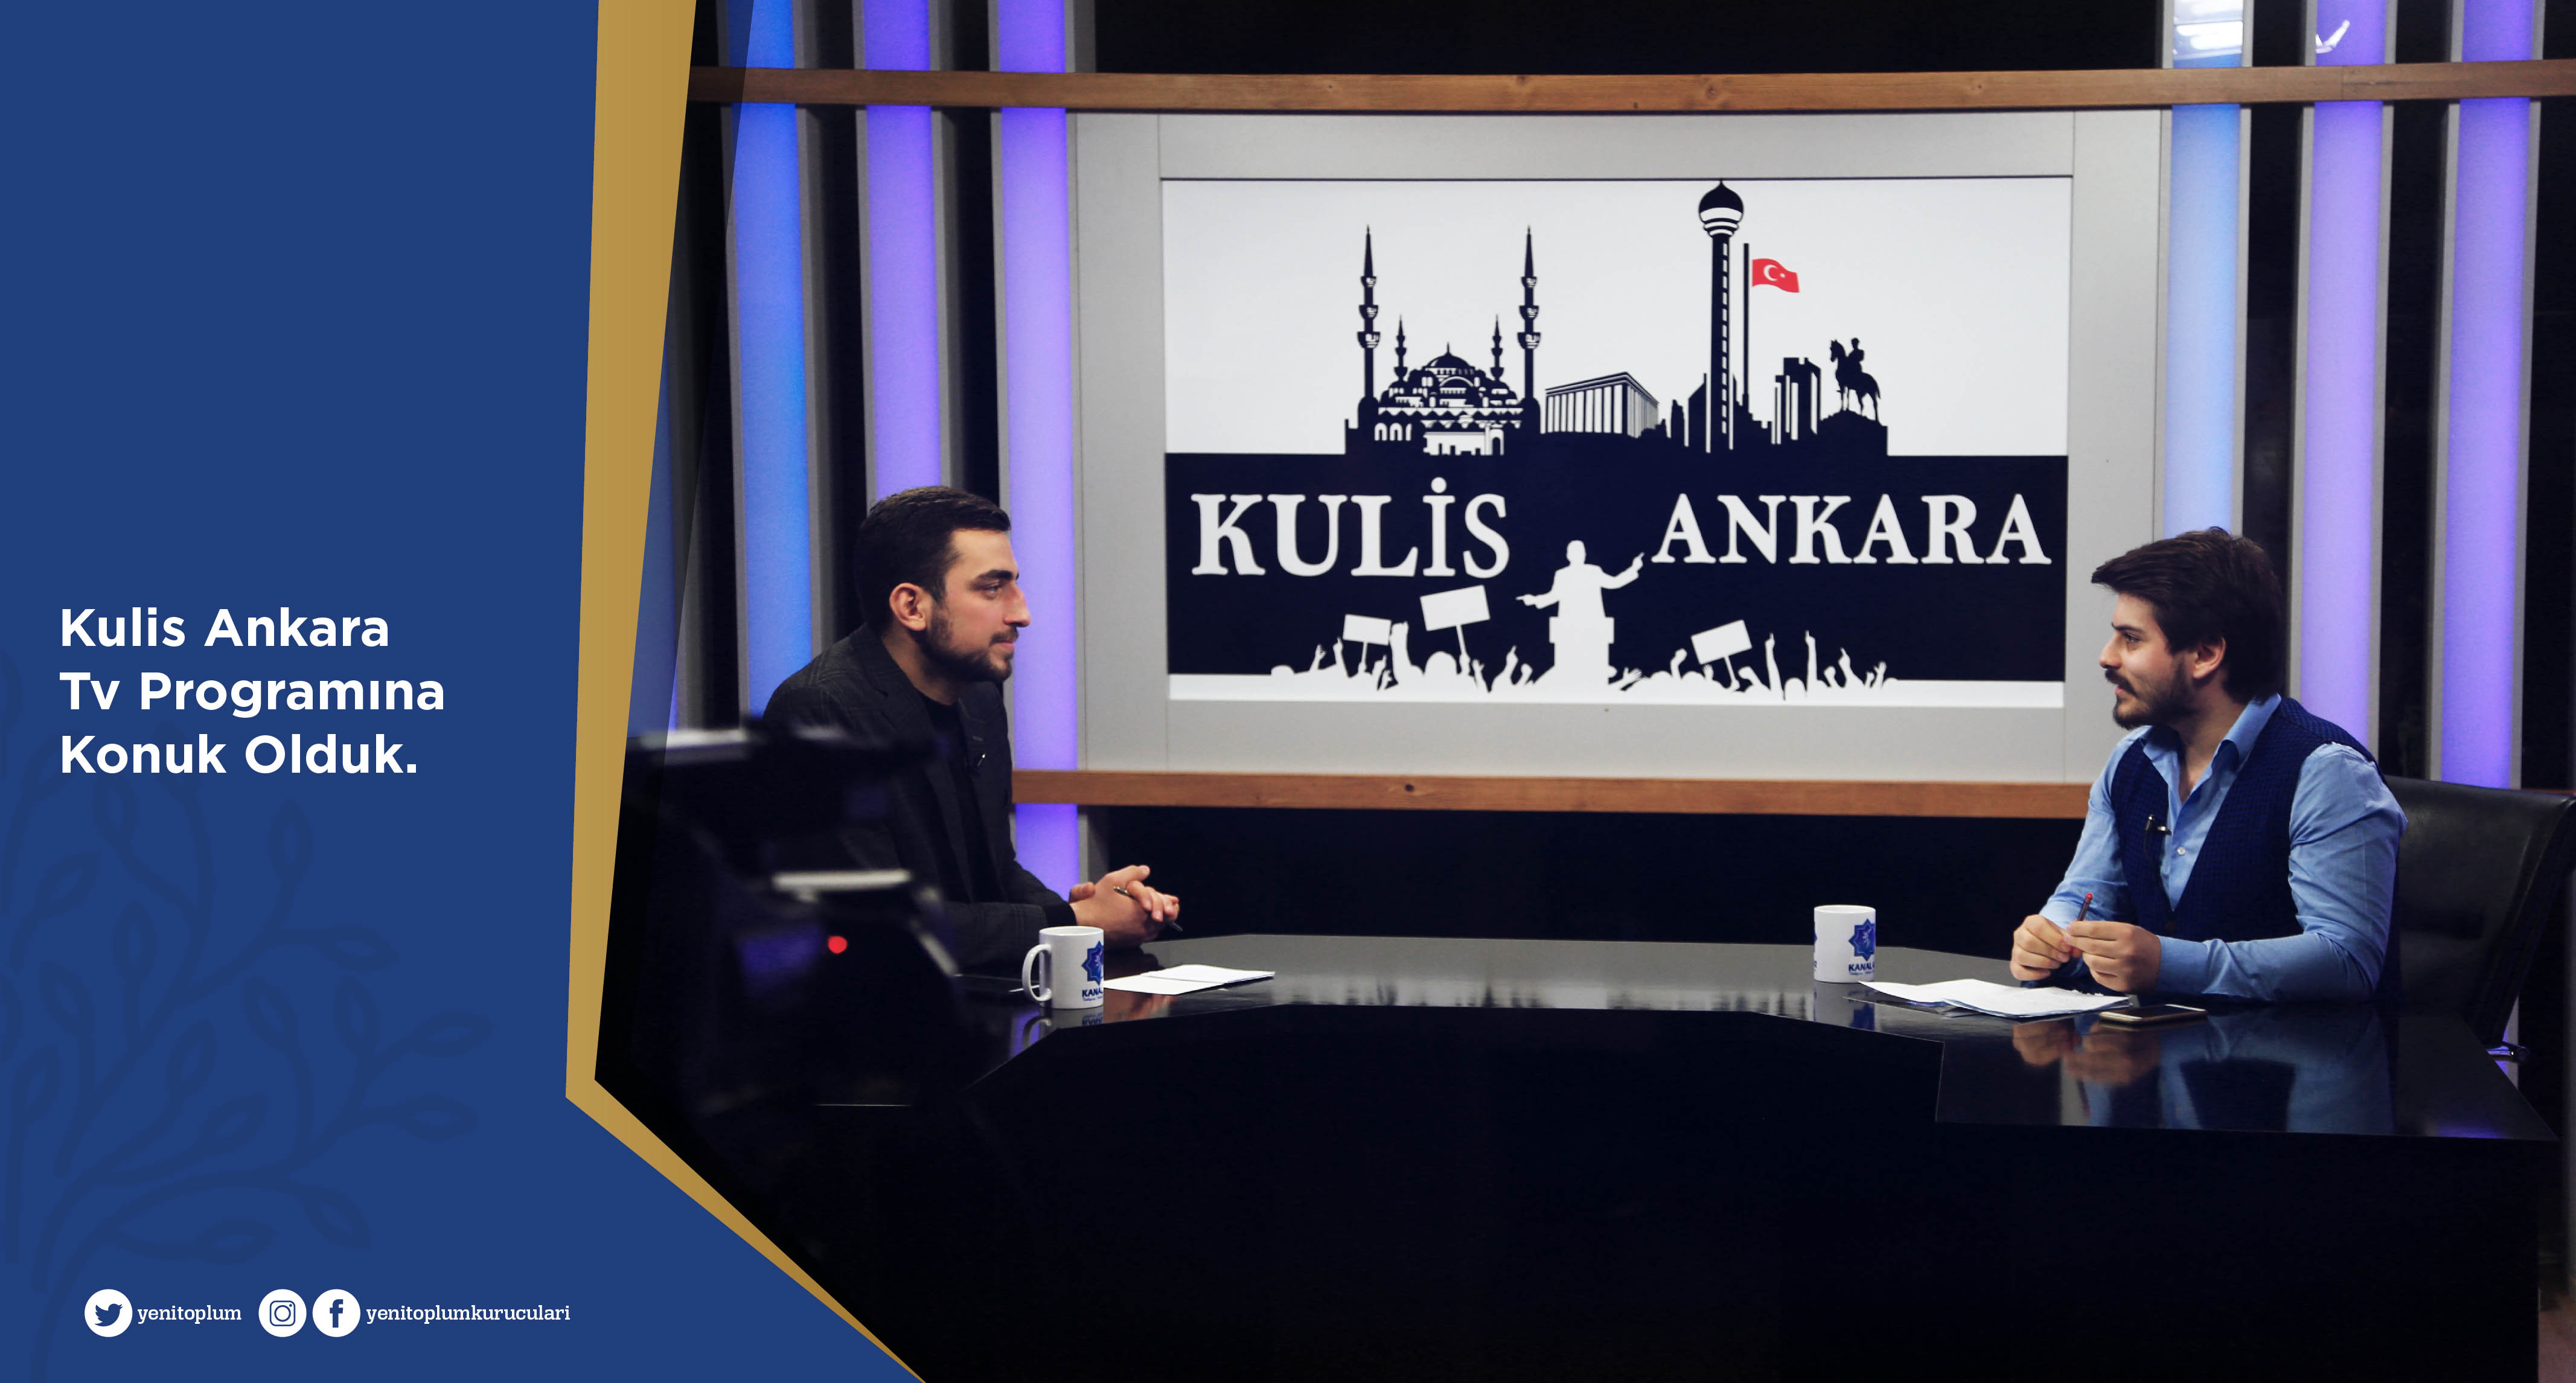 Kulis Ankara TV Programına Konuk Olduk